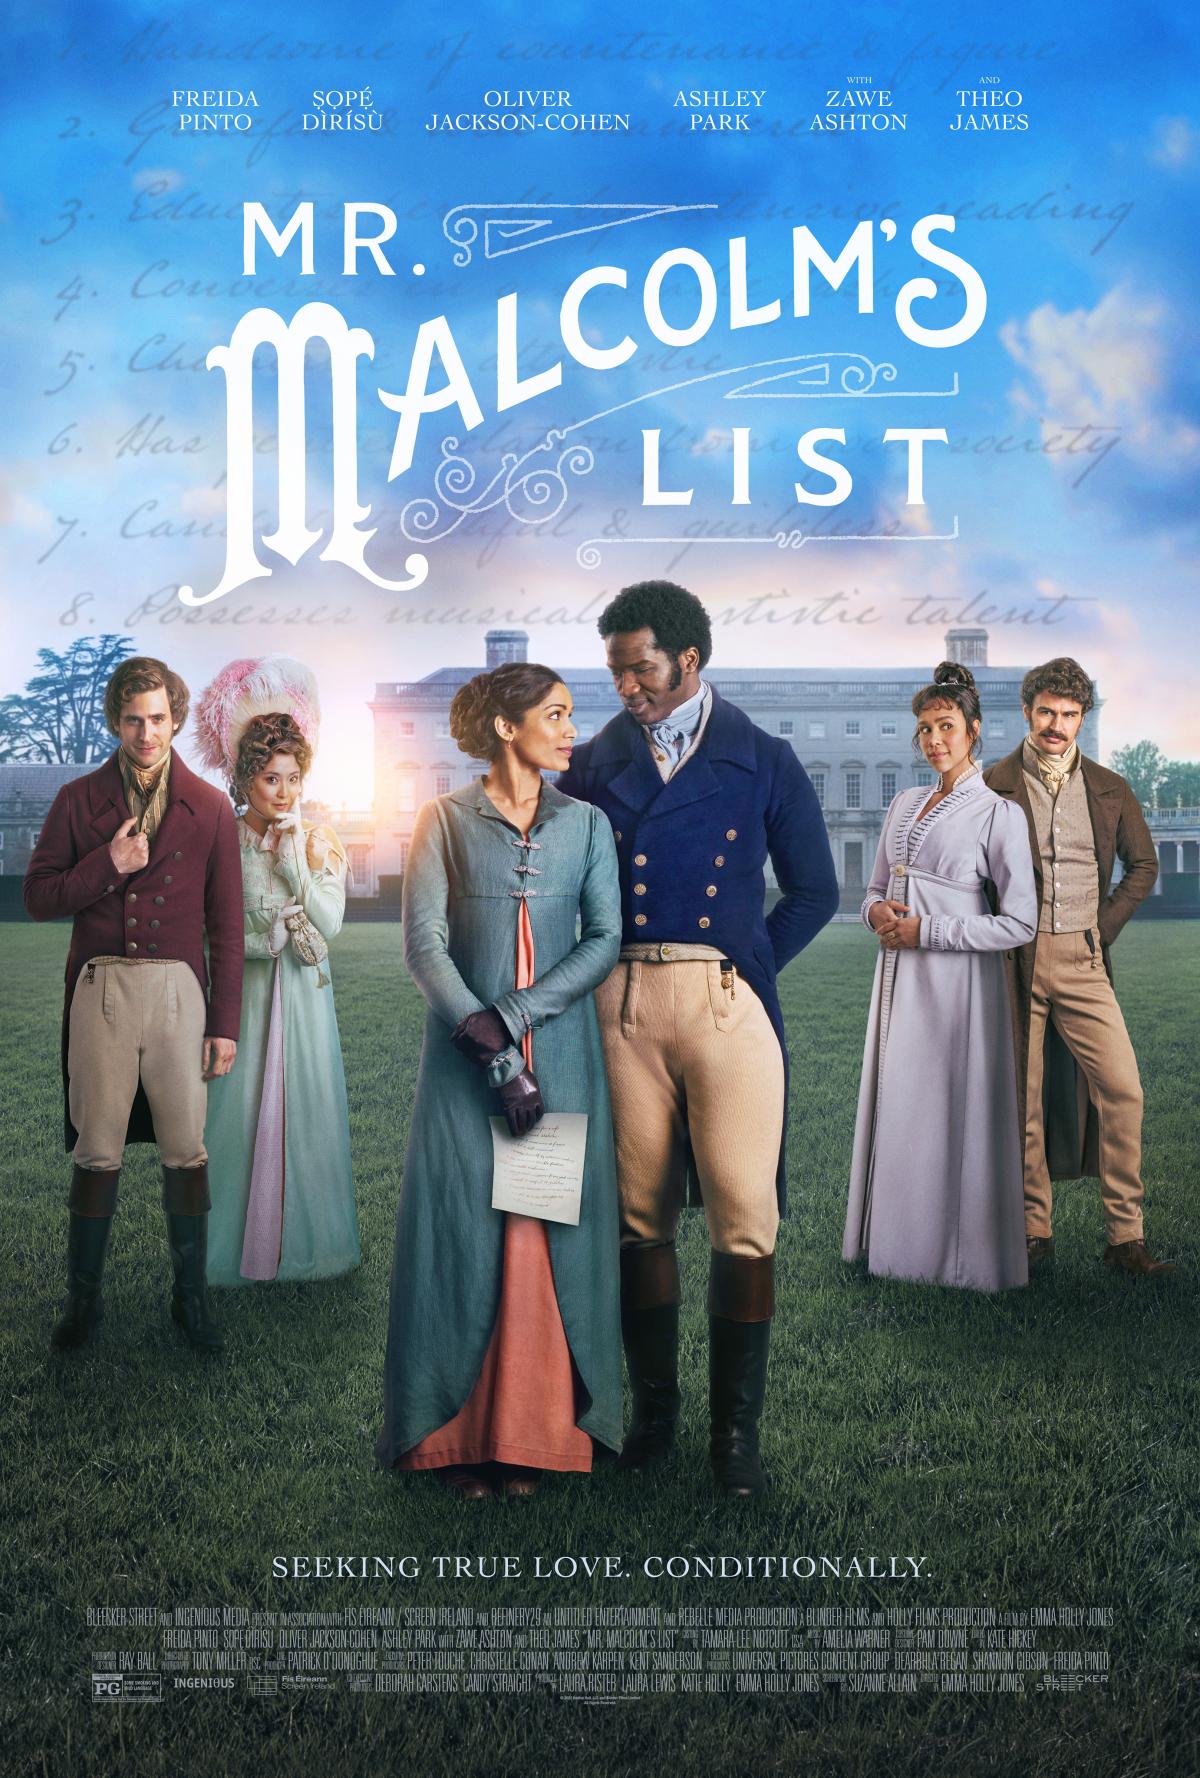 Cover Art for "Mr. Malcolm's List"